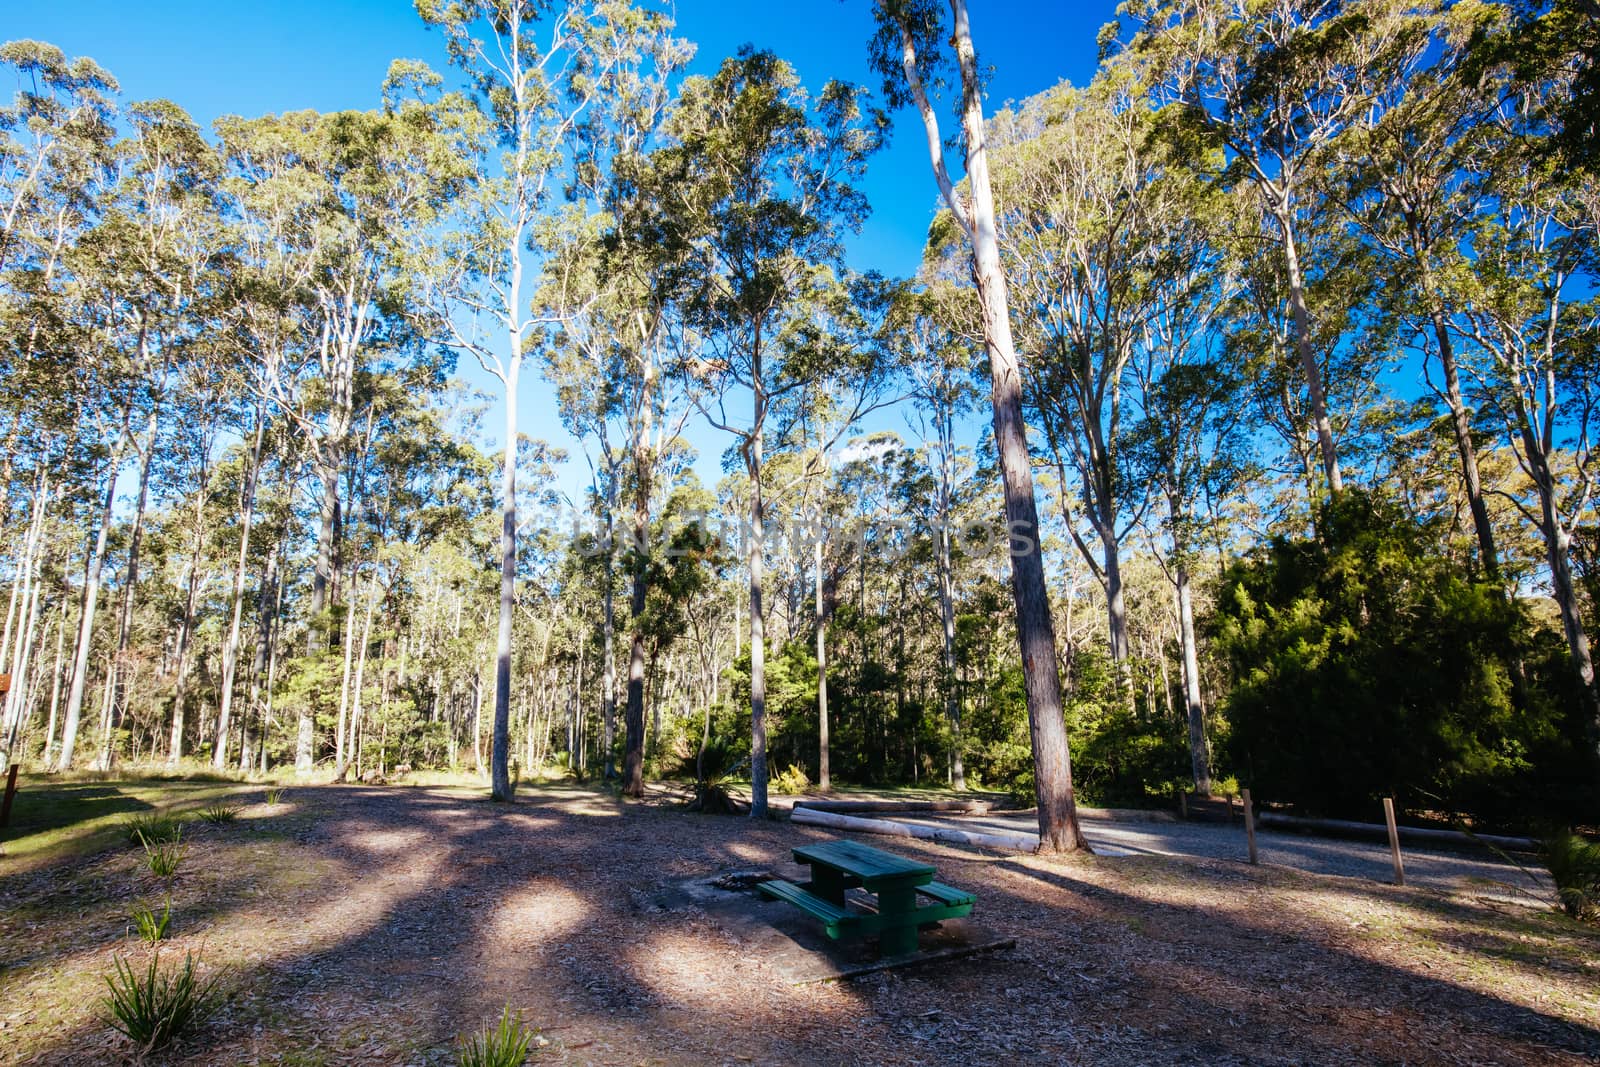 Bodalla Park and Lake Mummuga in Australia by FiledIMAGE